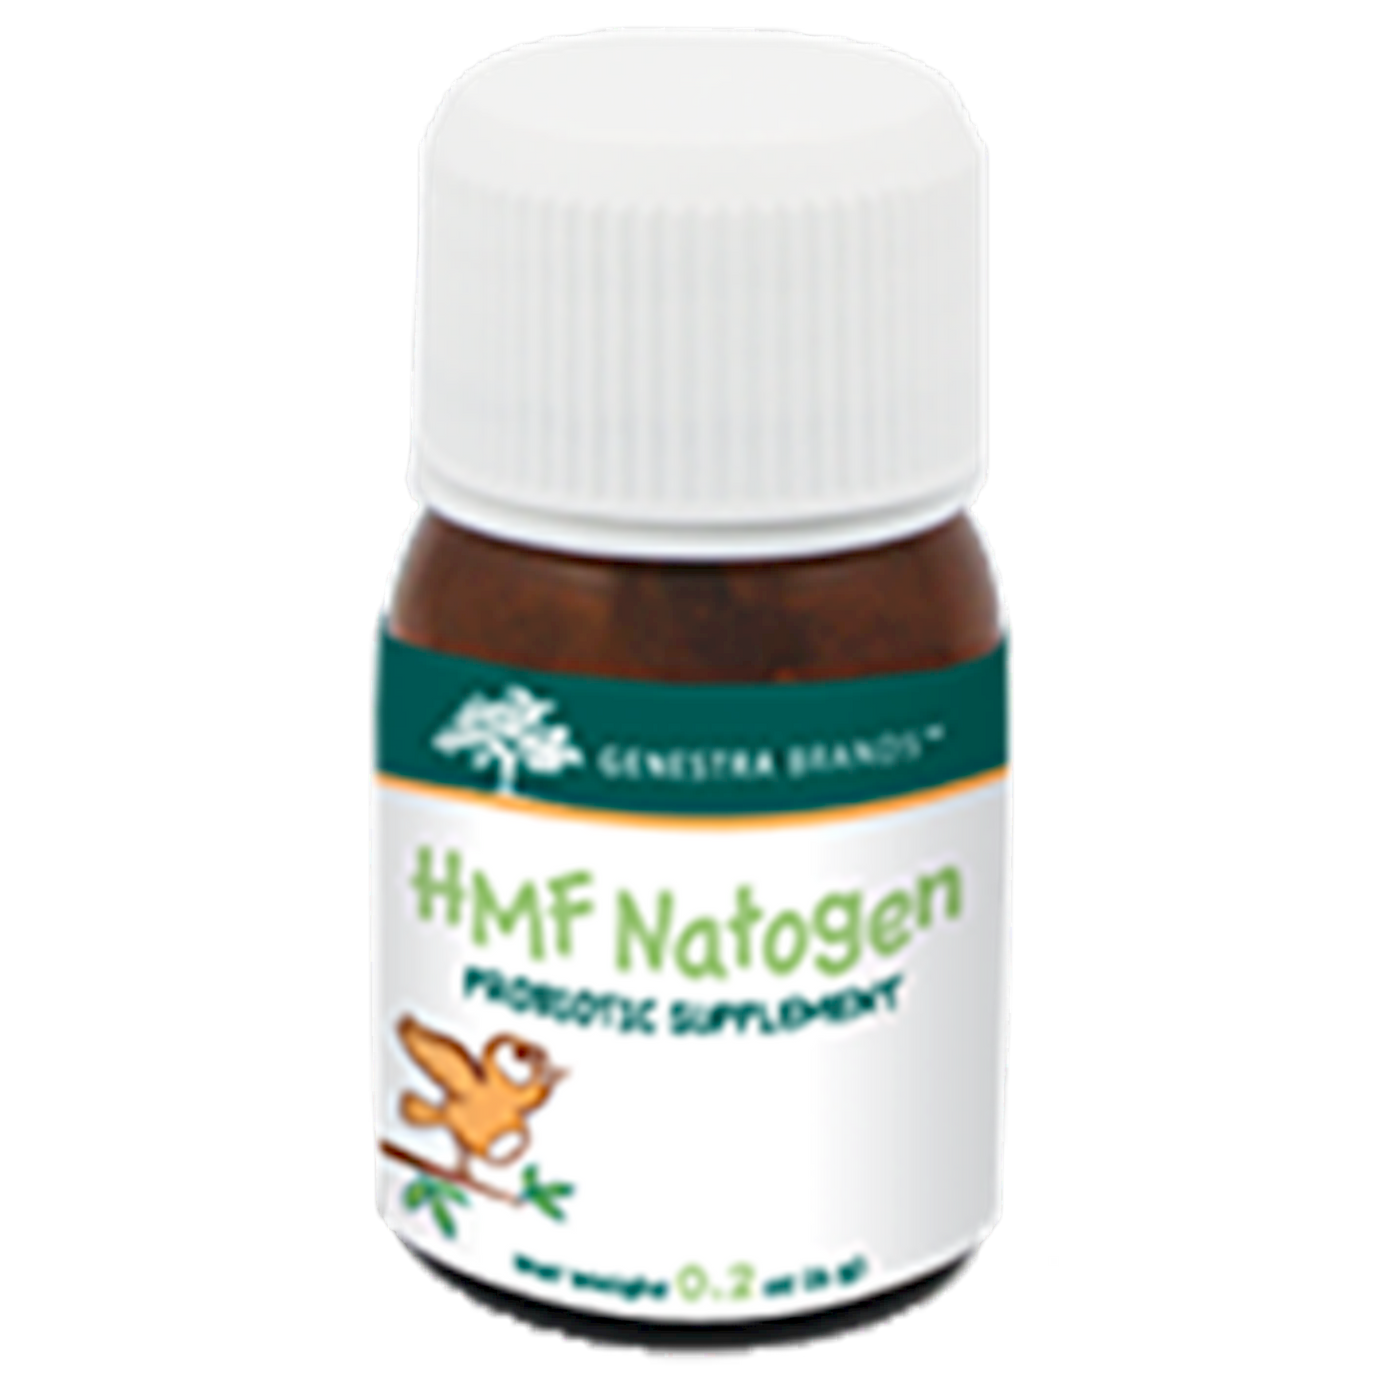 HMF Natogen  Curated Wellness